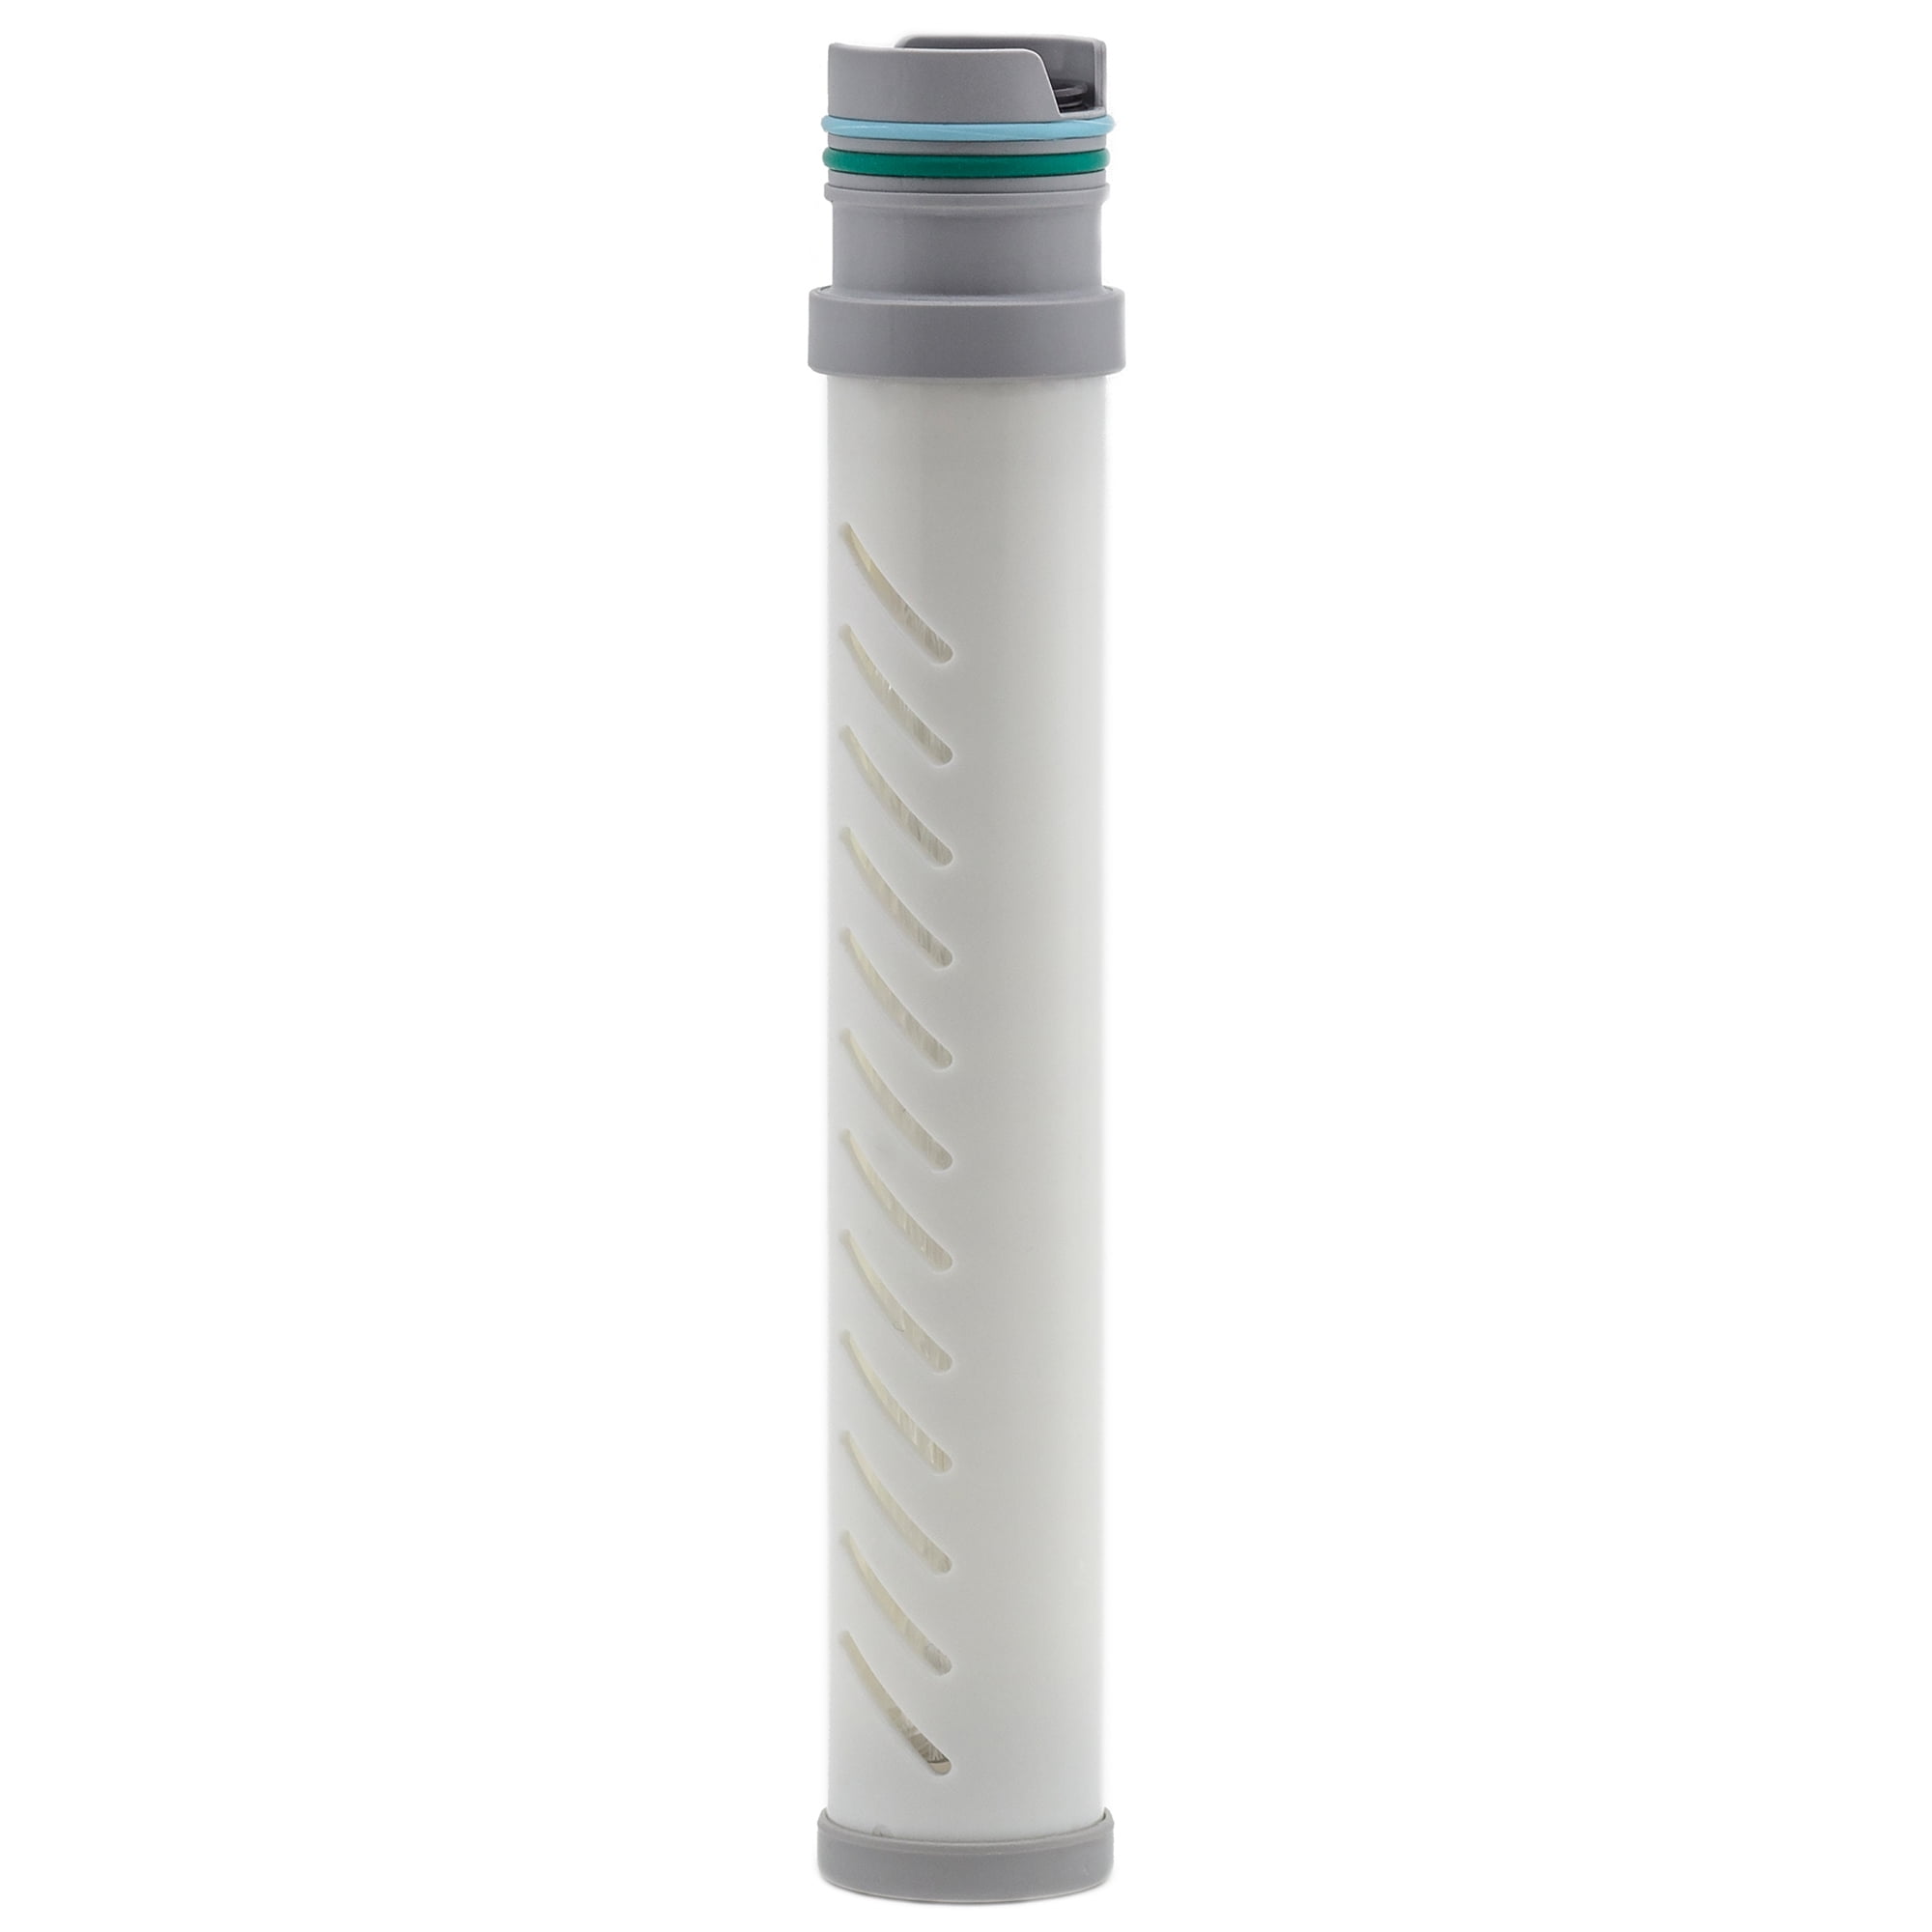 LifeStraw Go Water Bottle - Clear, 1 unit - Fred Meyer